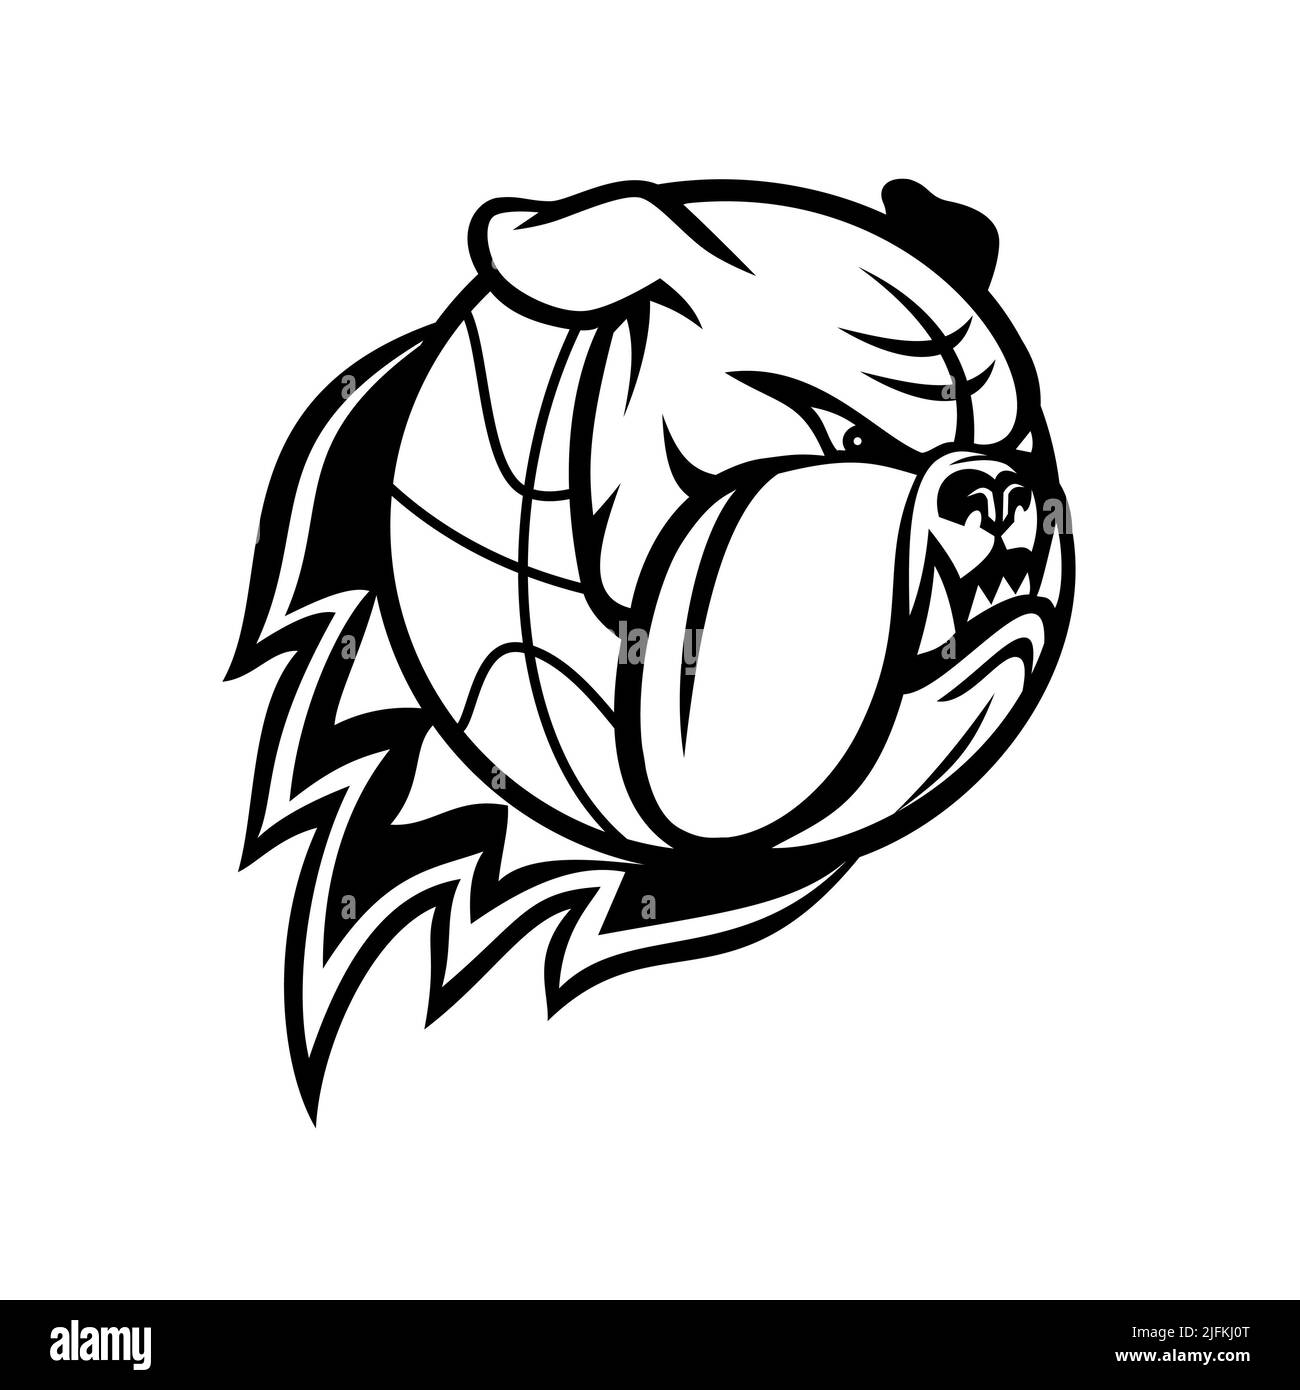 Premium Vector  Tattoo and t shirt design black and white hand drawn  bulldog baseball